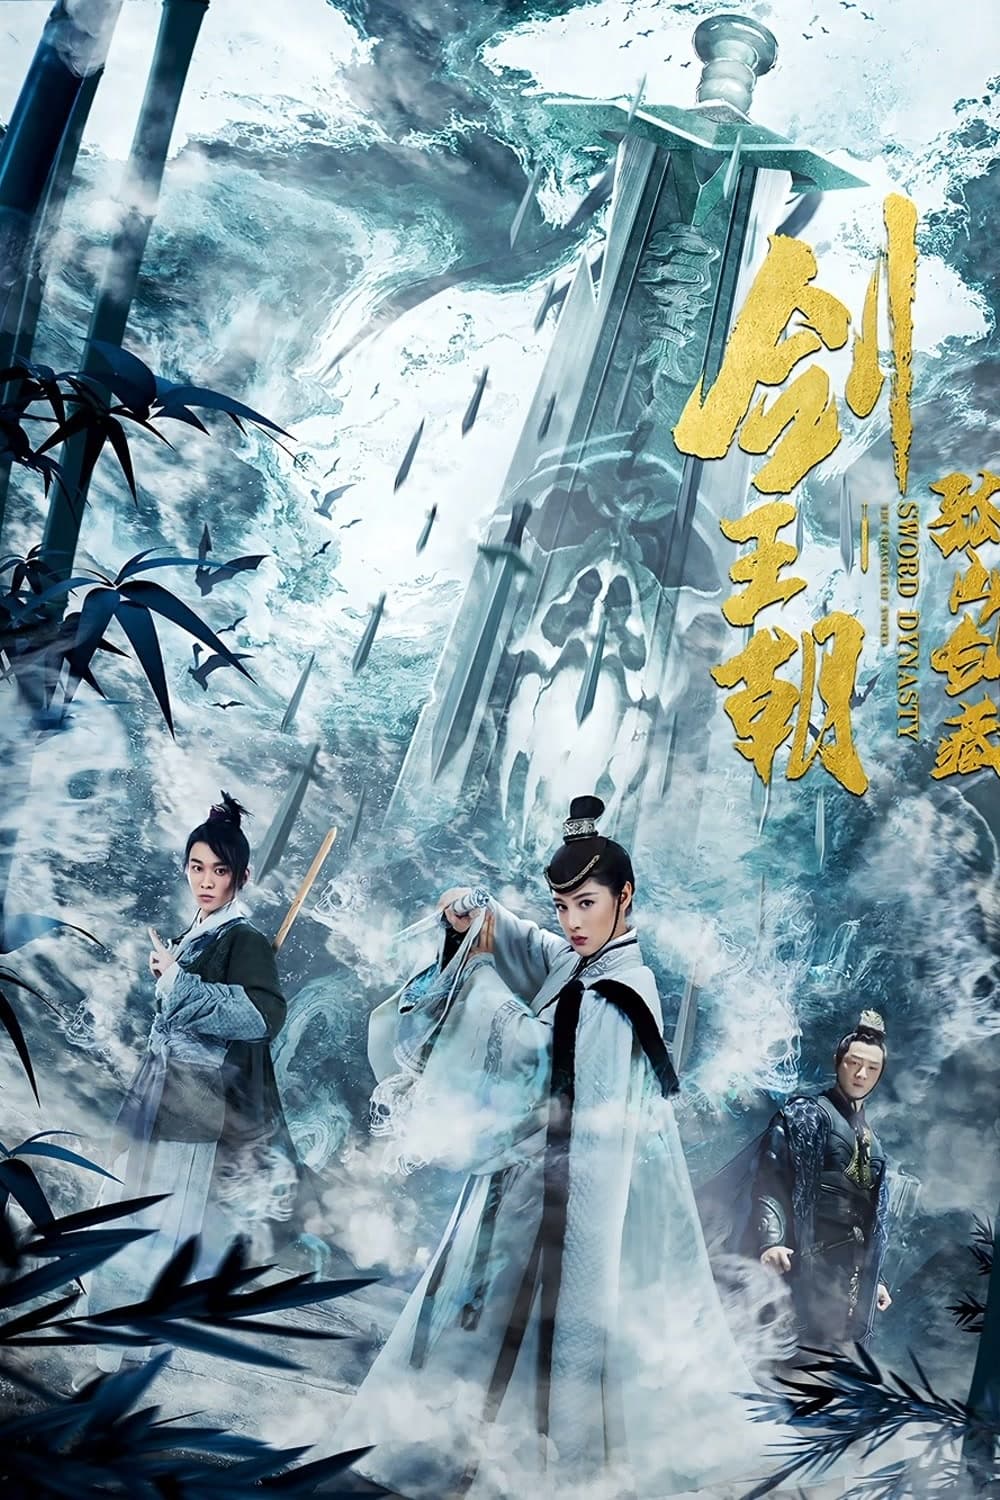 Kiếm Vương Triều Chi Cô Sơn Kiếm Tàng (Sword Dynasty Fantasy Masterwork) [2020]